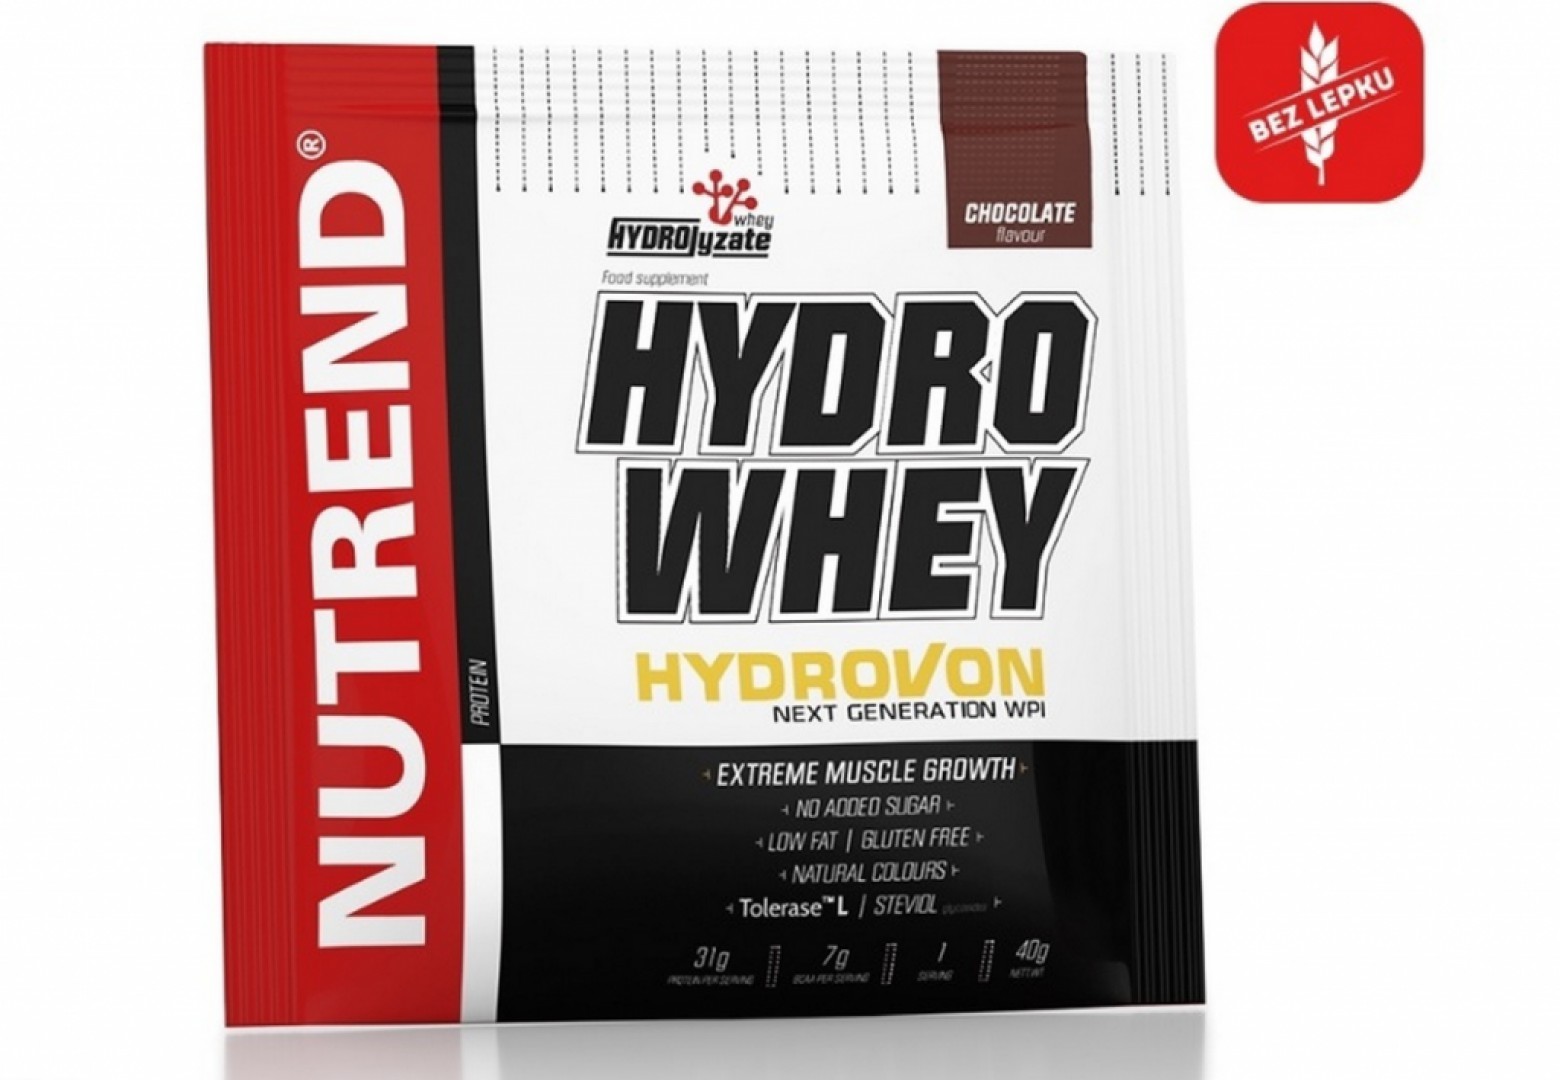 Hydro protein